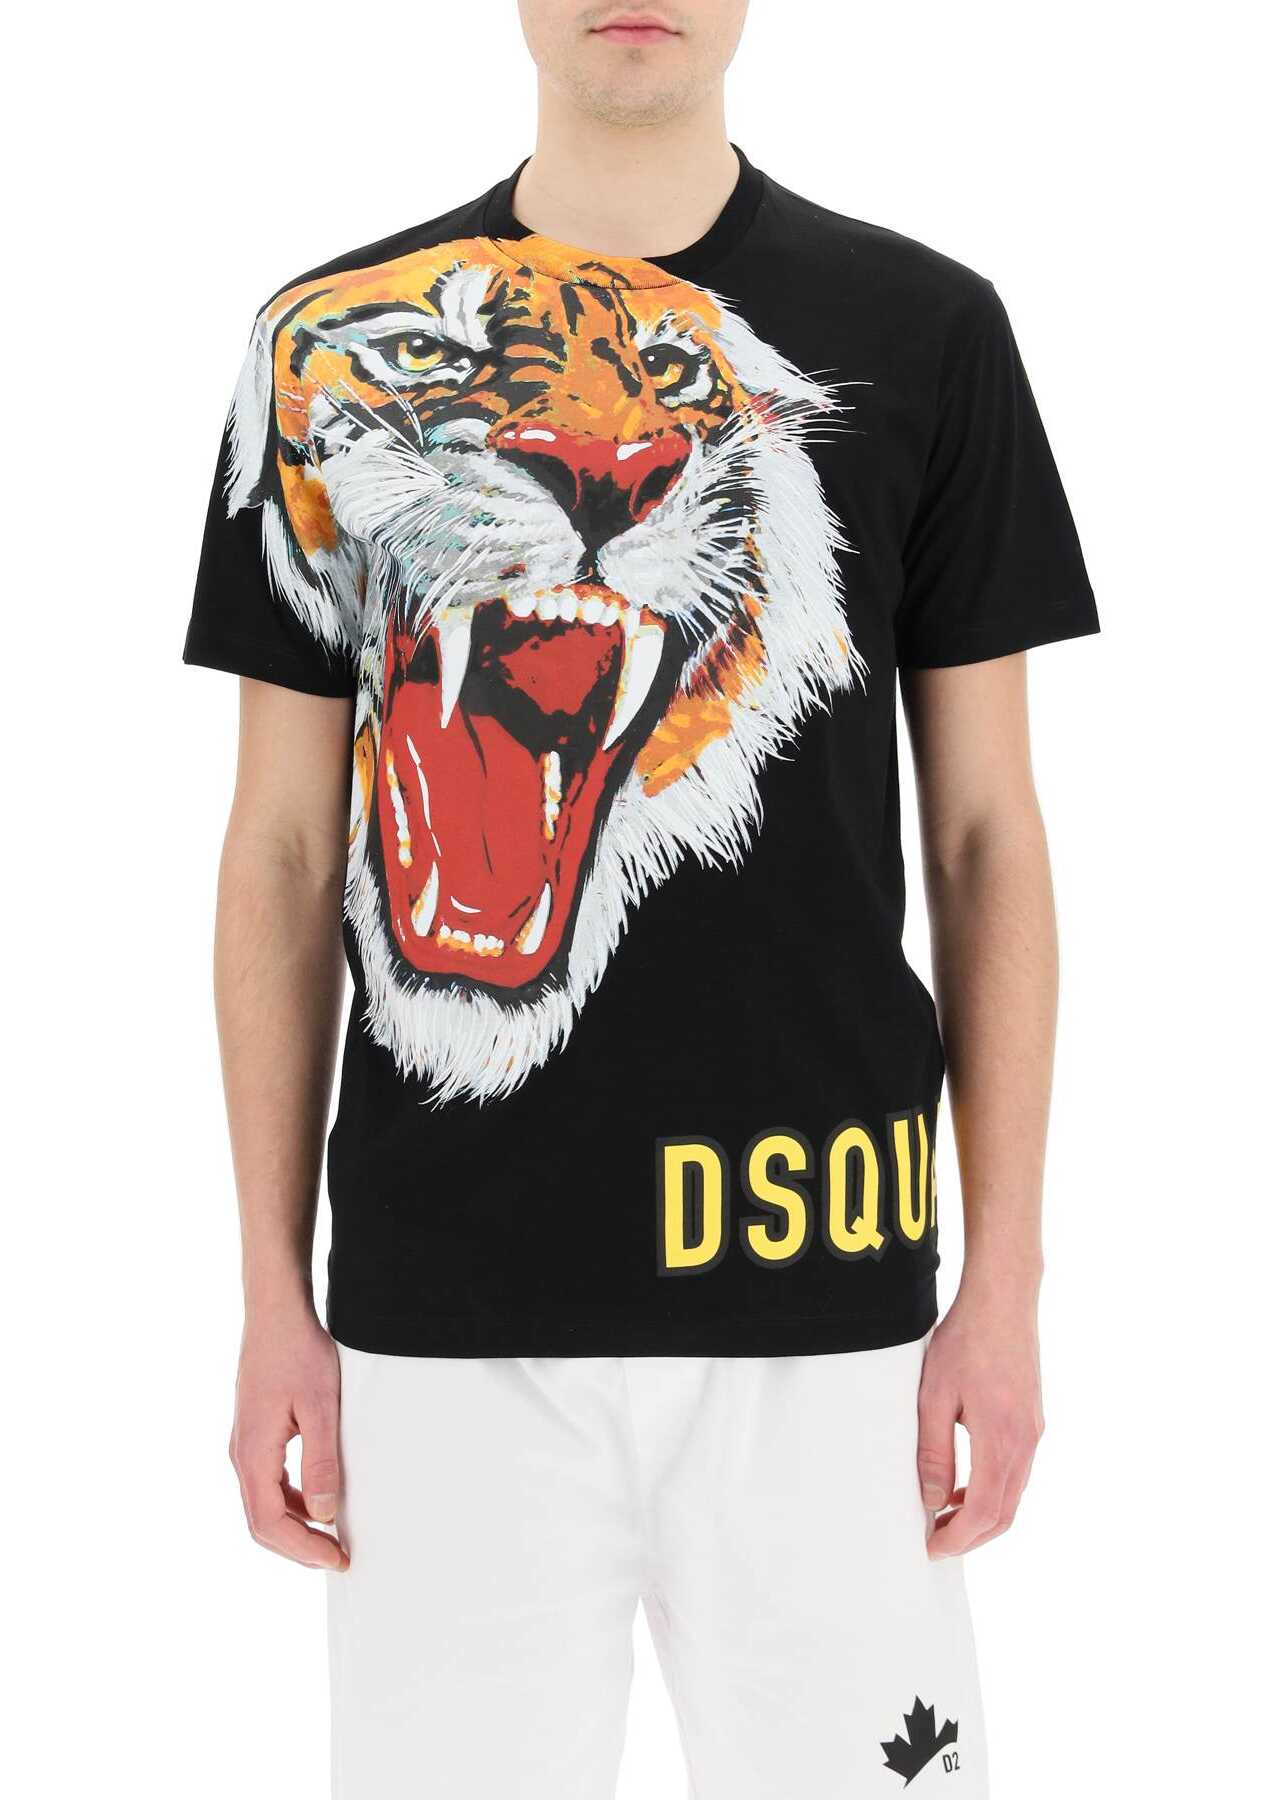 DSQUARED2 Maxi Tiger Print T-Shirt S74GD0967 S23009 BLACK